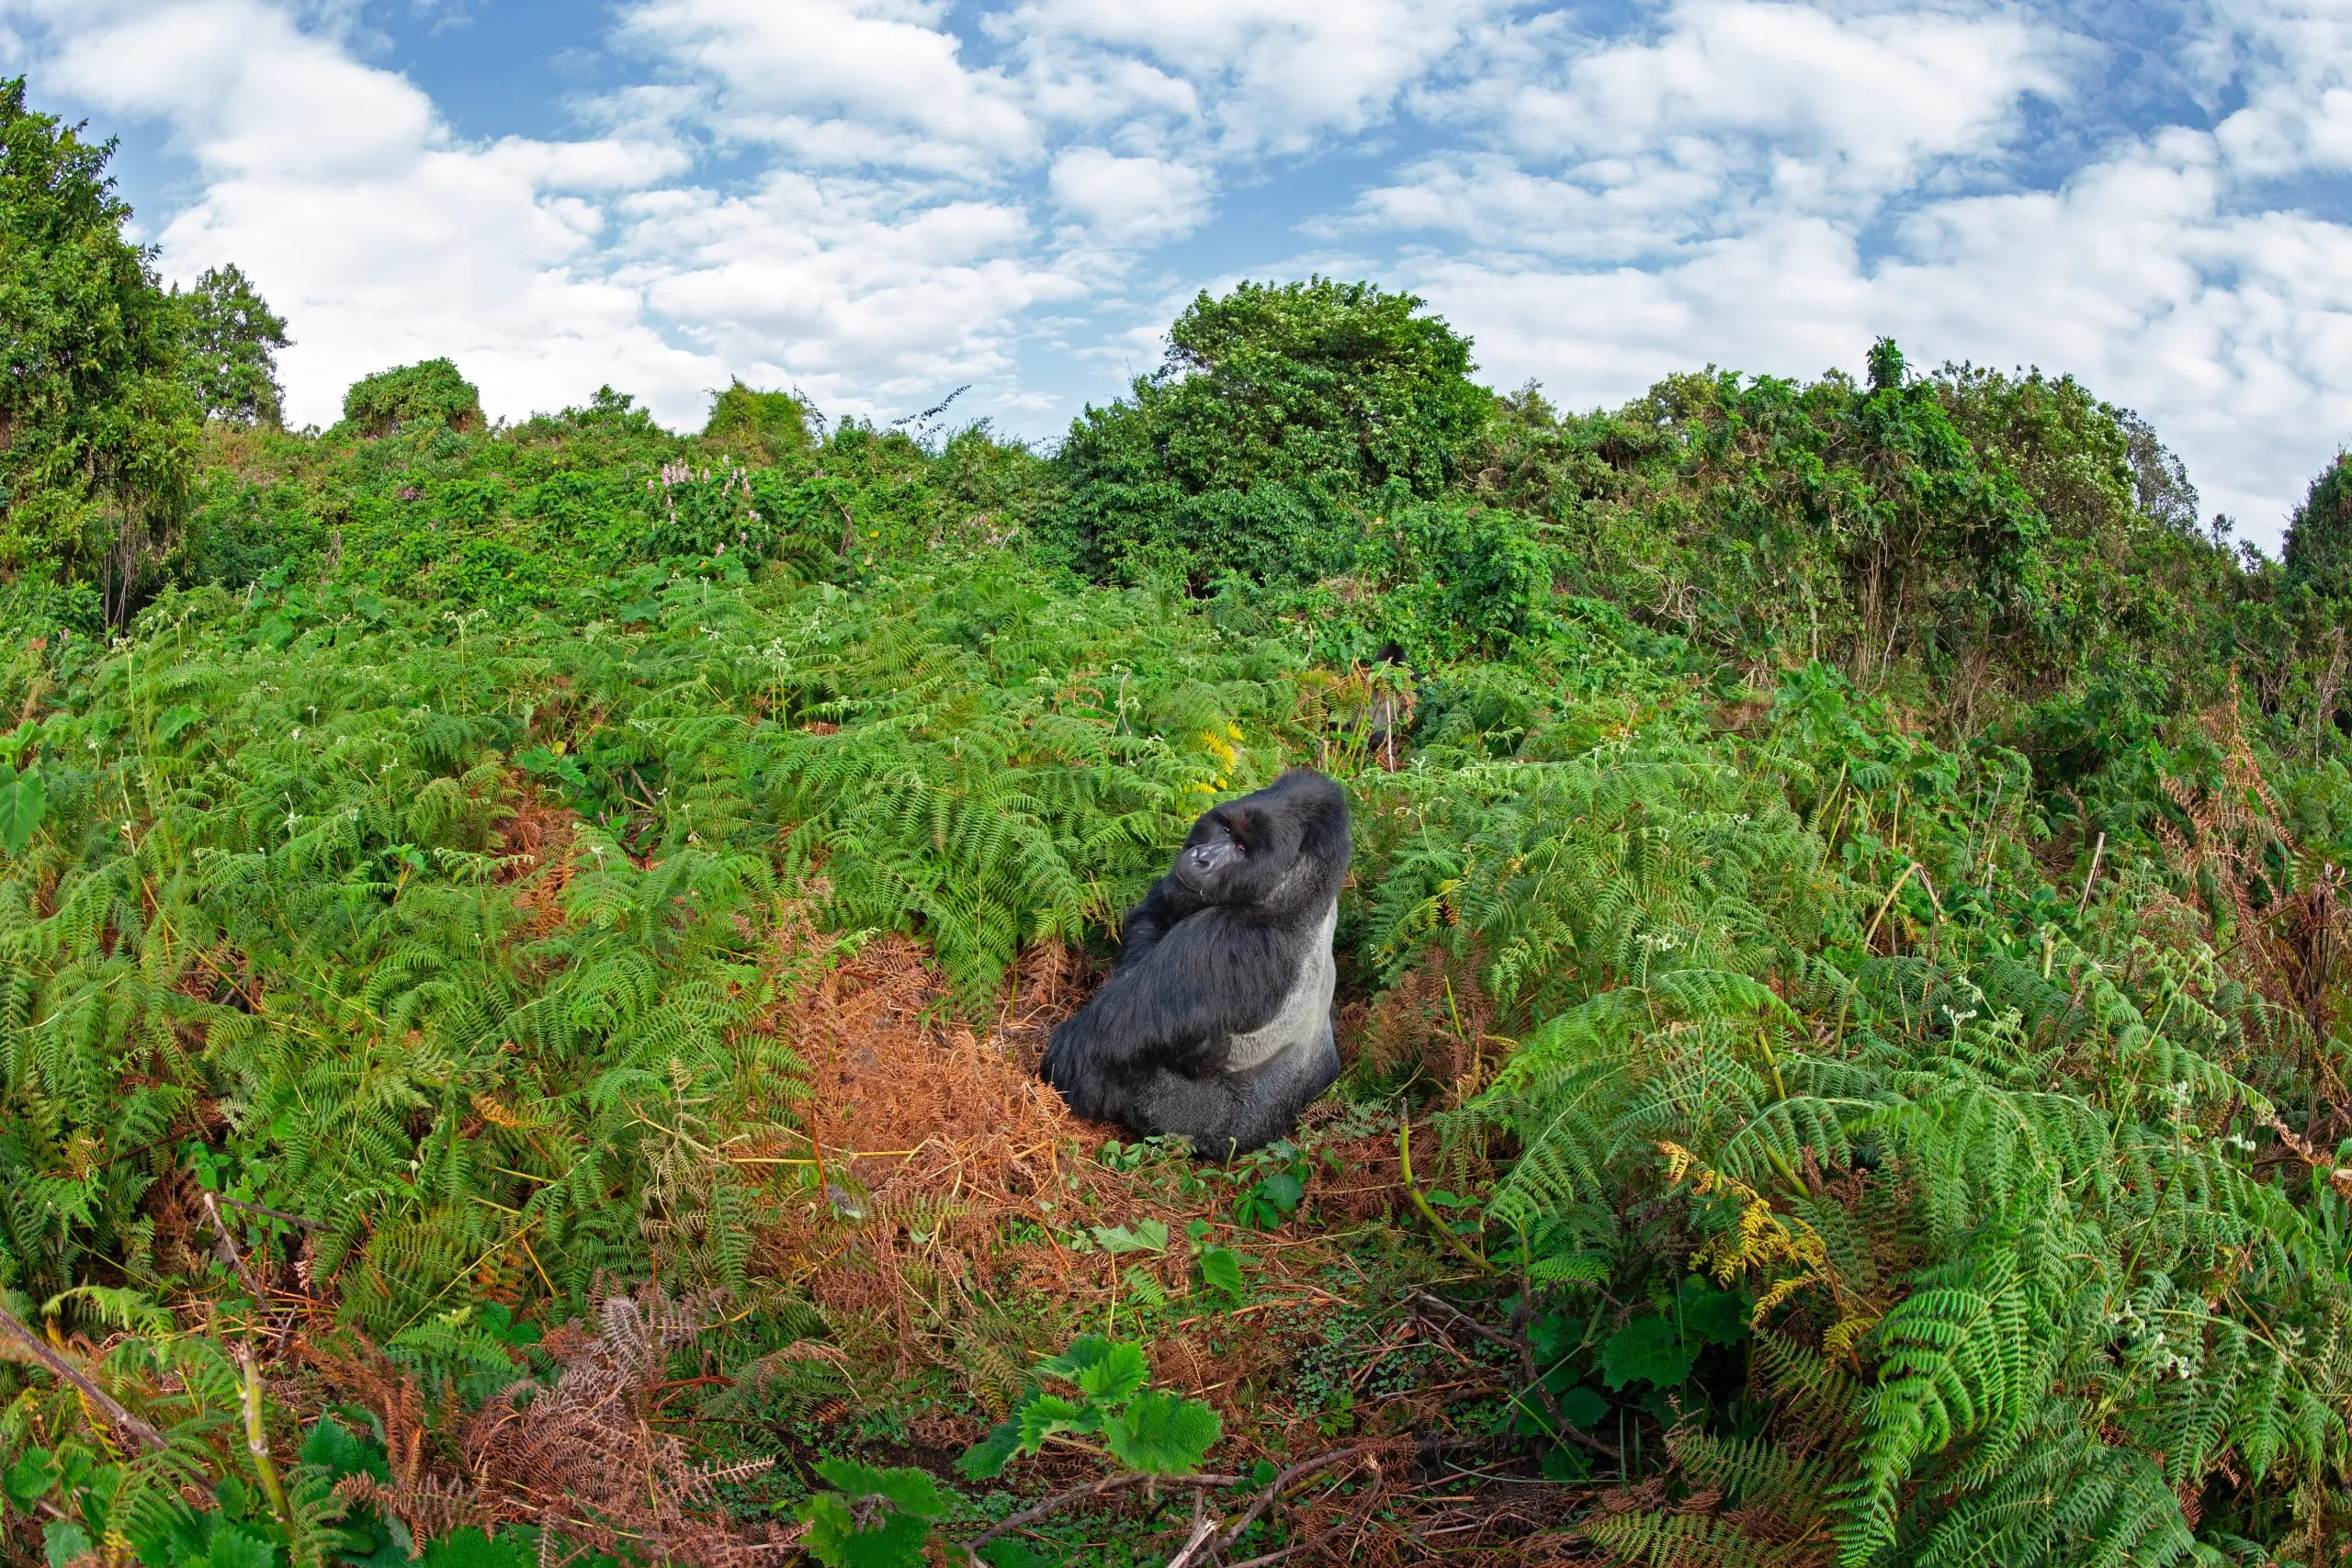 Mountains gorilla in the rainforest. Rare gorillas in the Ugandan mountains. Wildlife in the Africa.